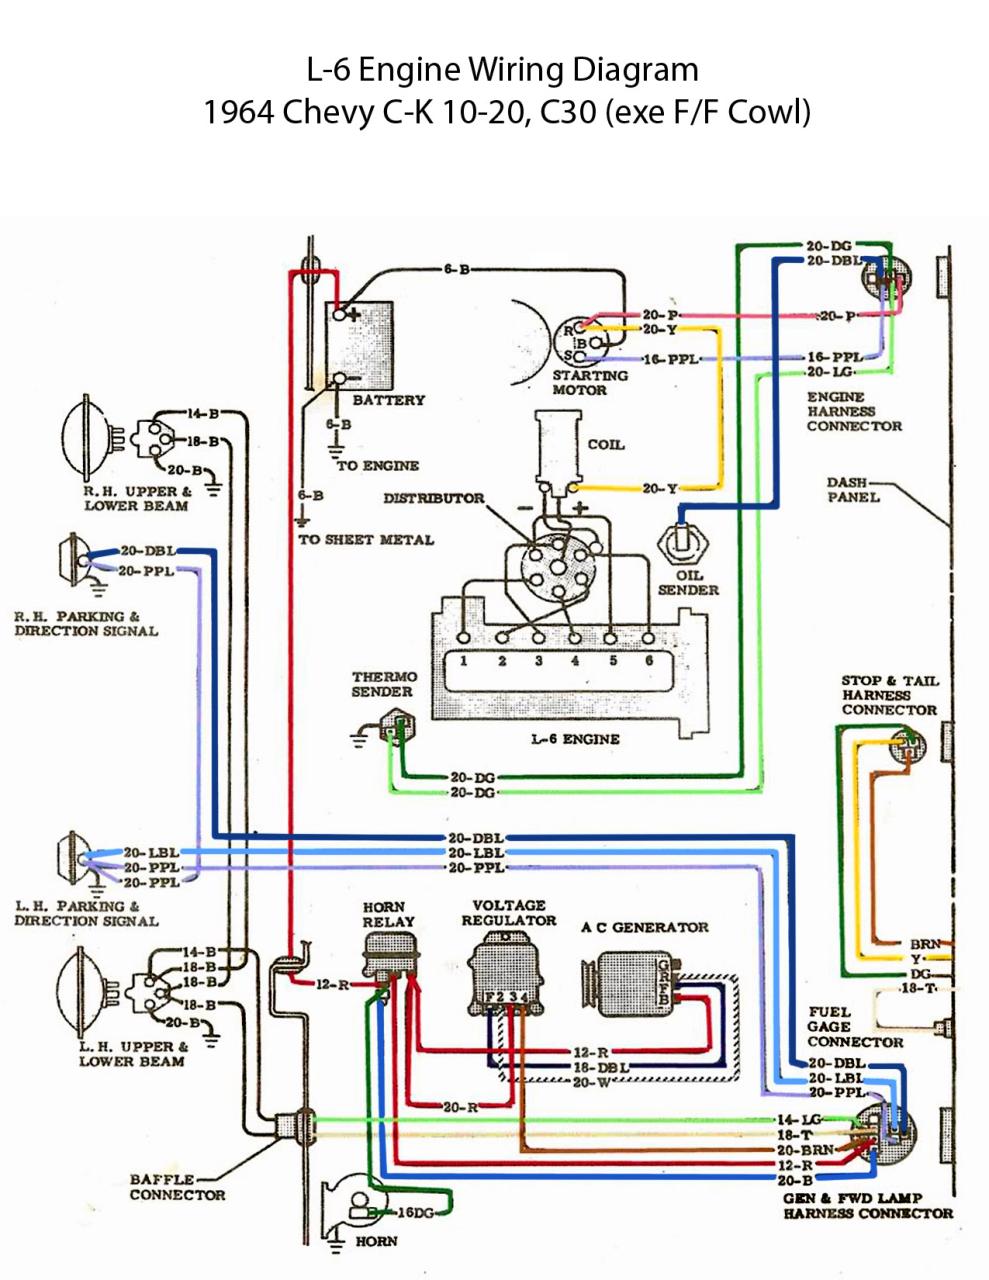 Turn Signal Wiring Diagram Chevy Truck Cadician's Blog